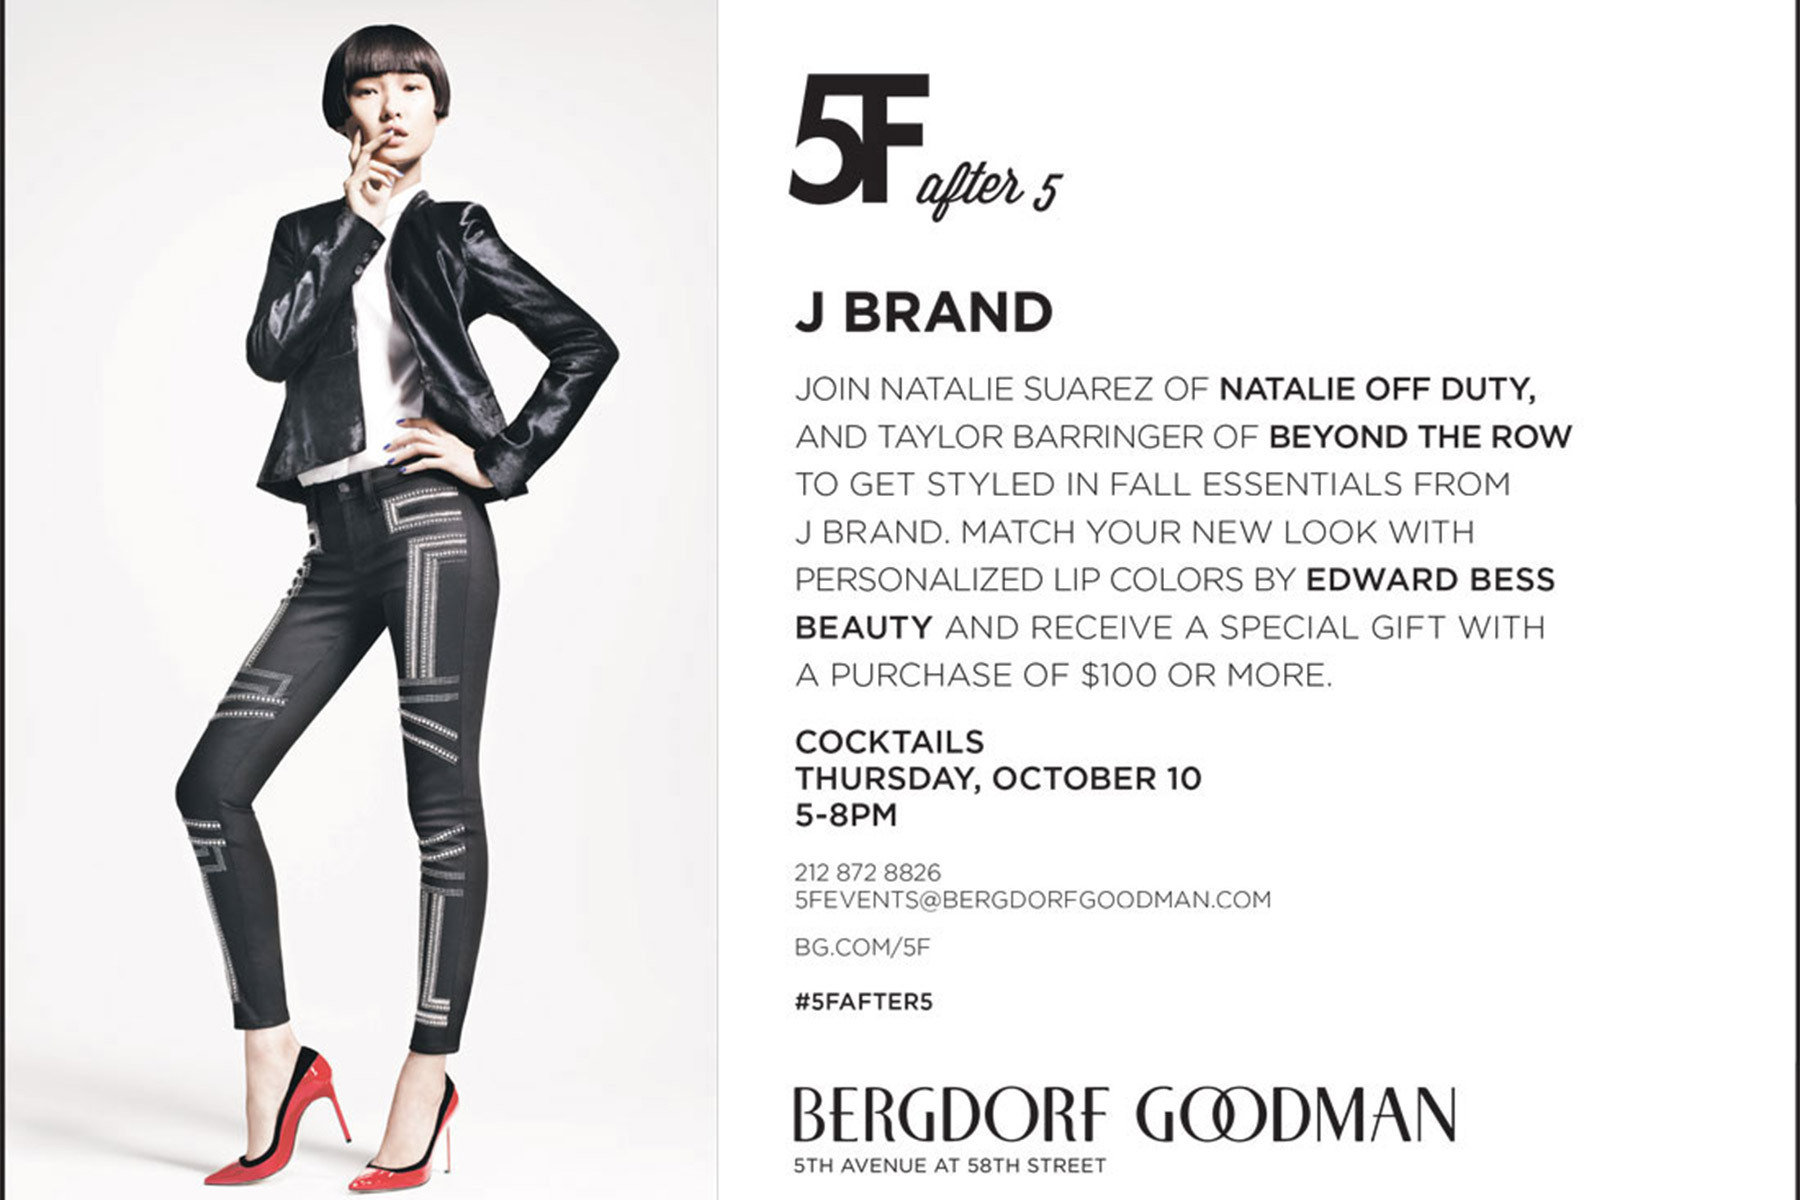 J Brand Jeans, Bergdorf Goodman